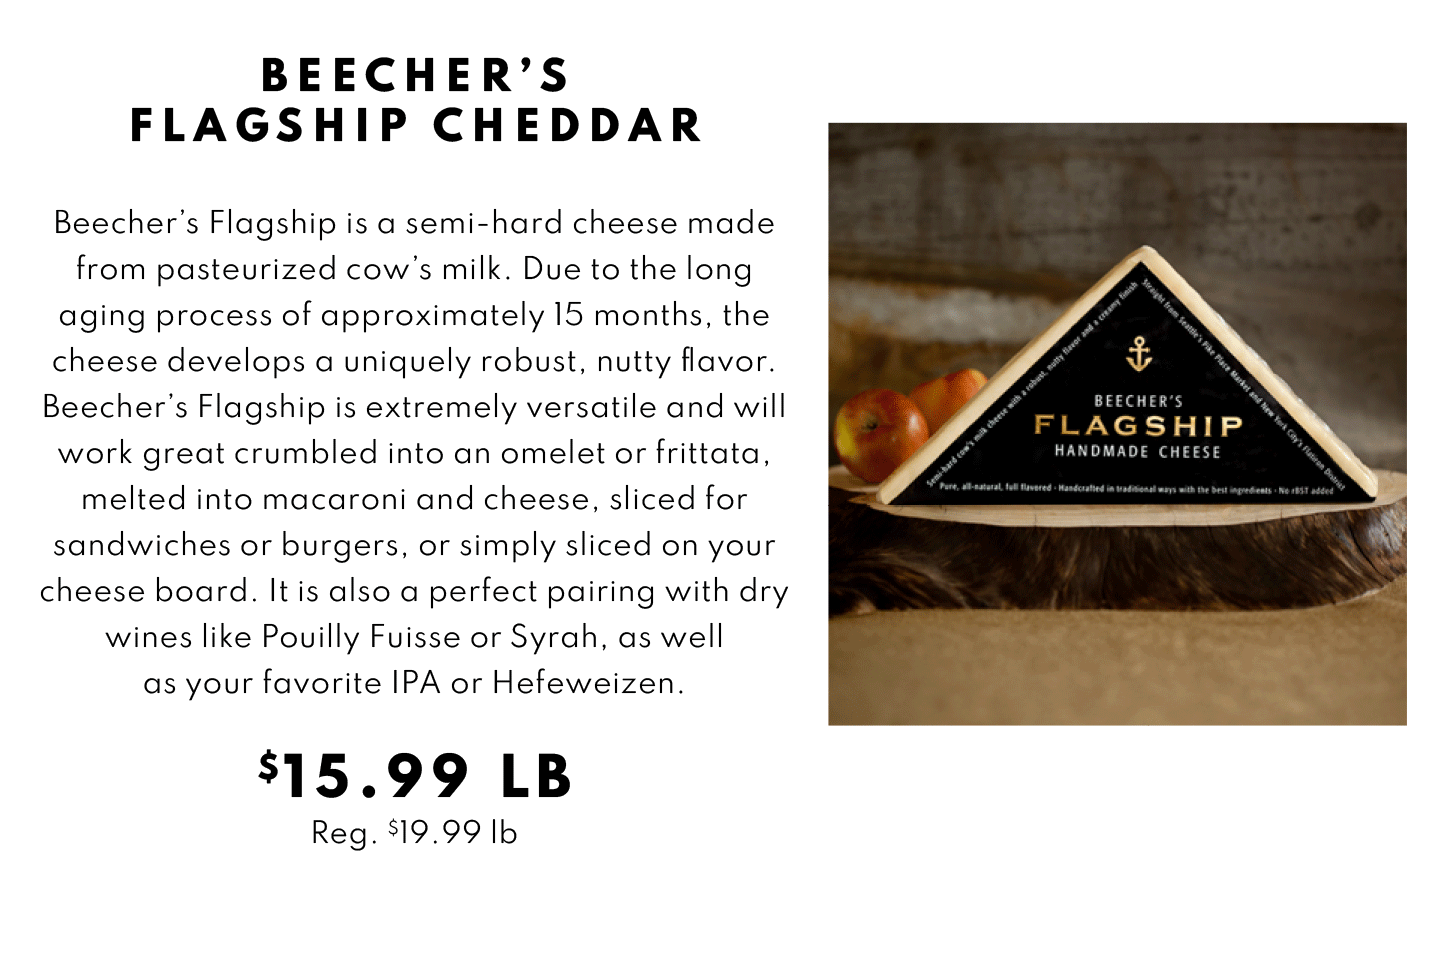 Beecher's Flagship Cheddar $15.99 lb